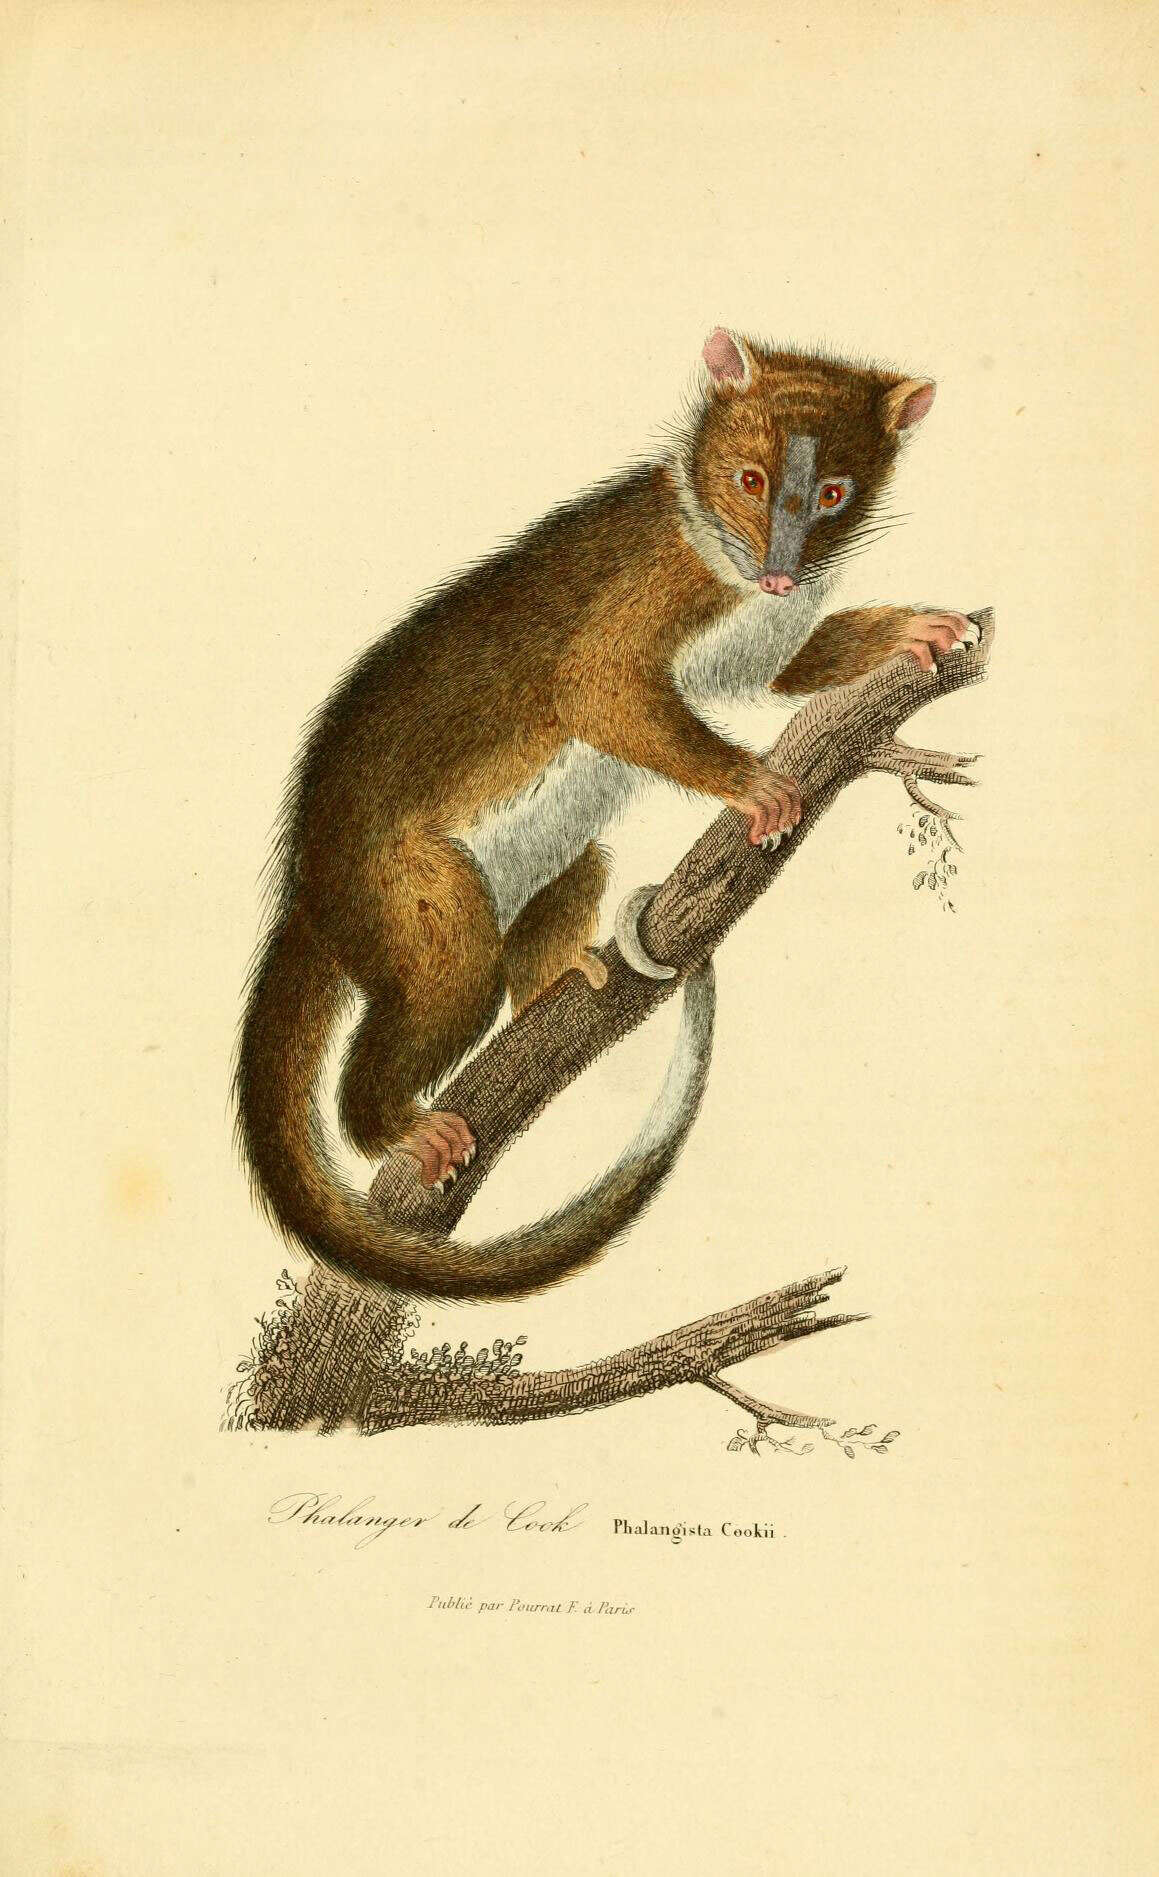 Image of ringtail possums